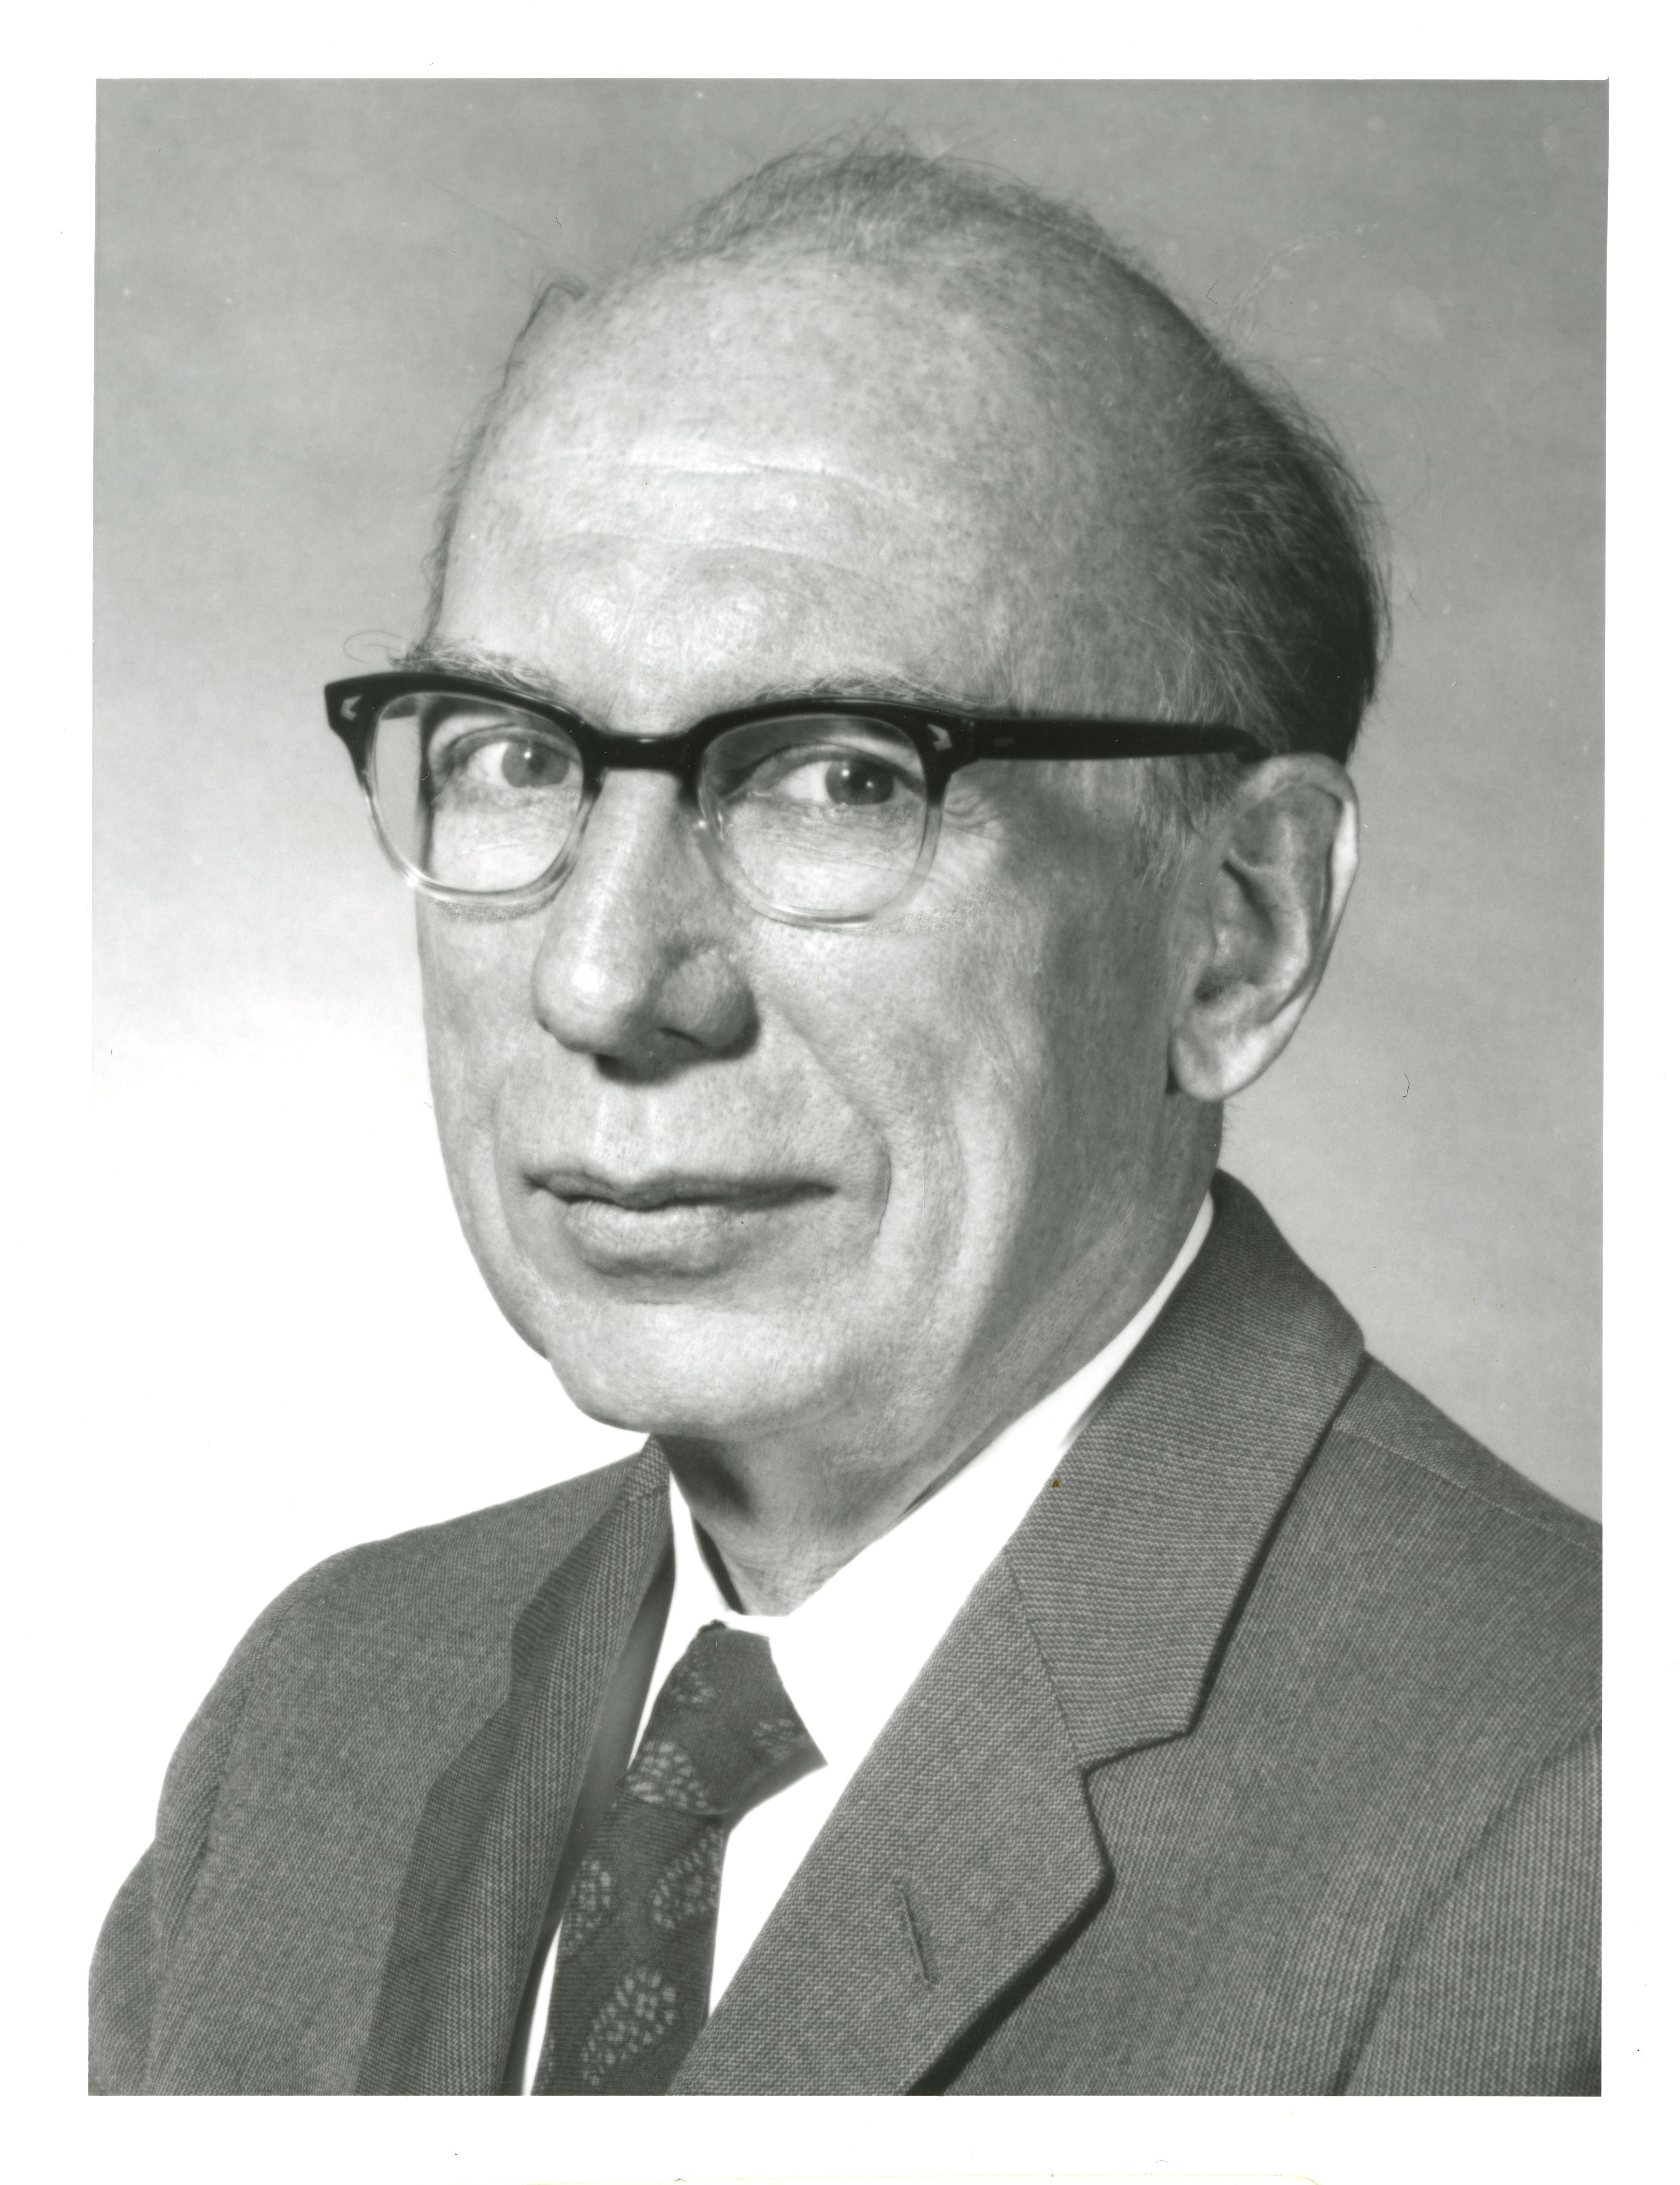 Photograph of Charles P. Saylor, 1962.